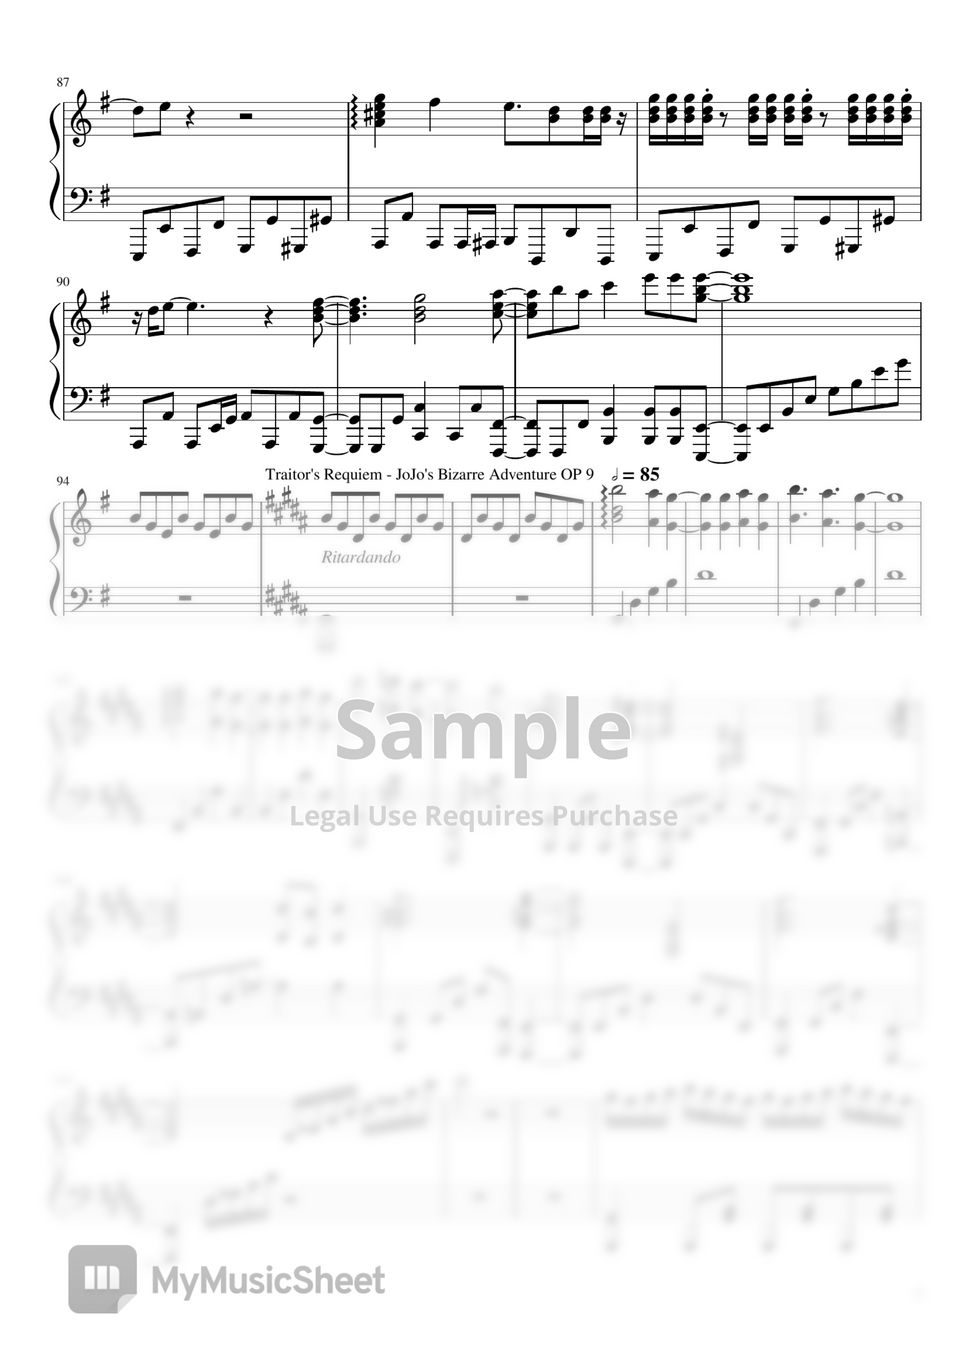 Traitor's Requiem - Jojo's Bizarre Adventure OP 9 Sheet music for Piano  (Solo)